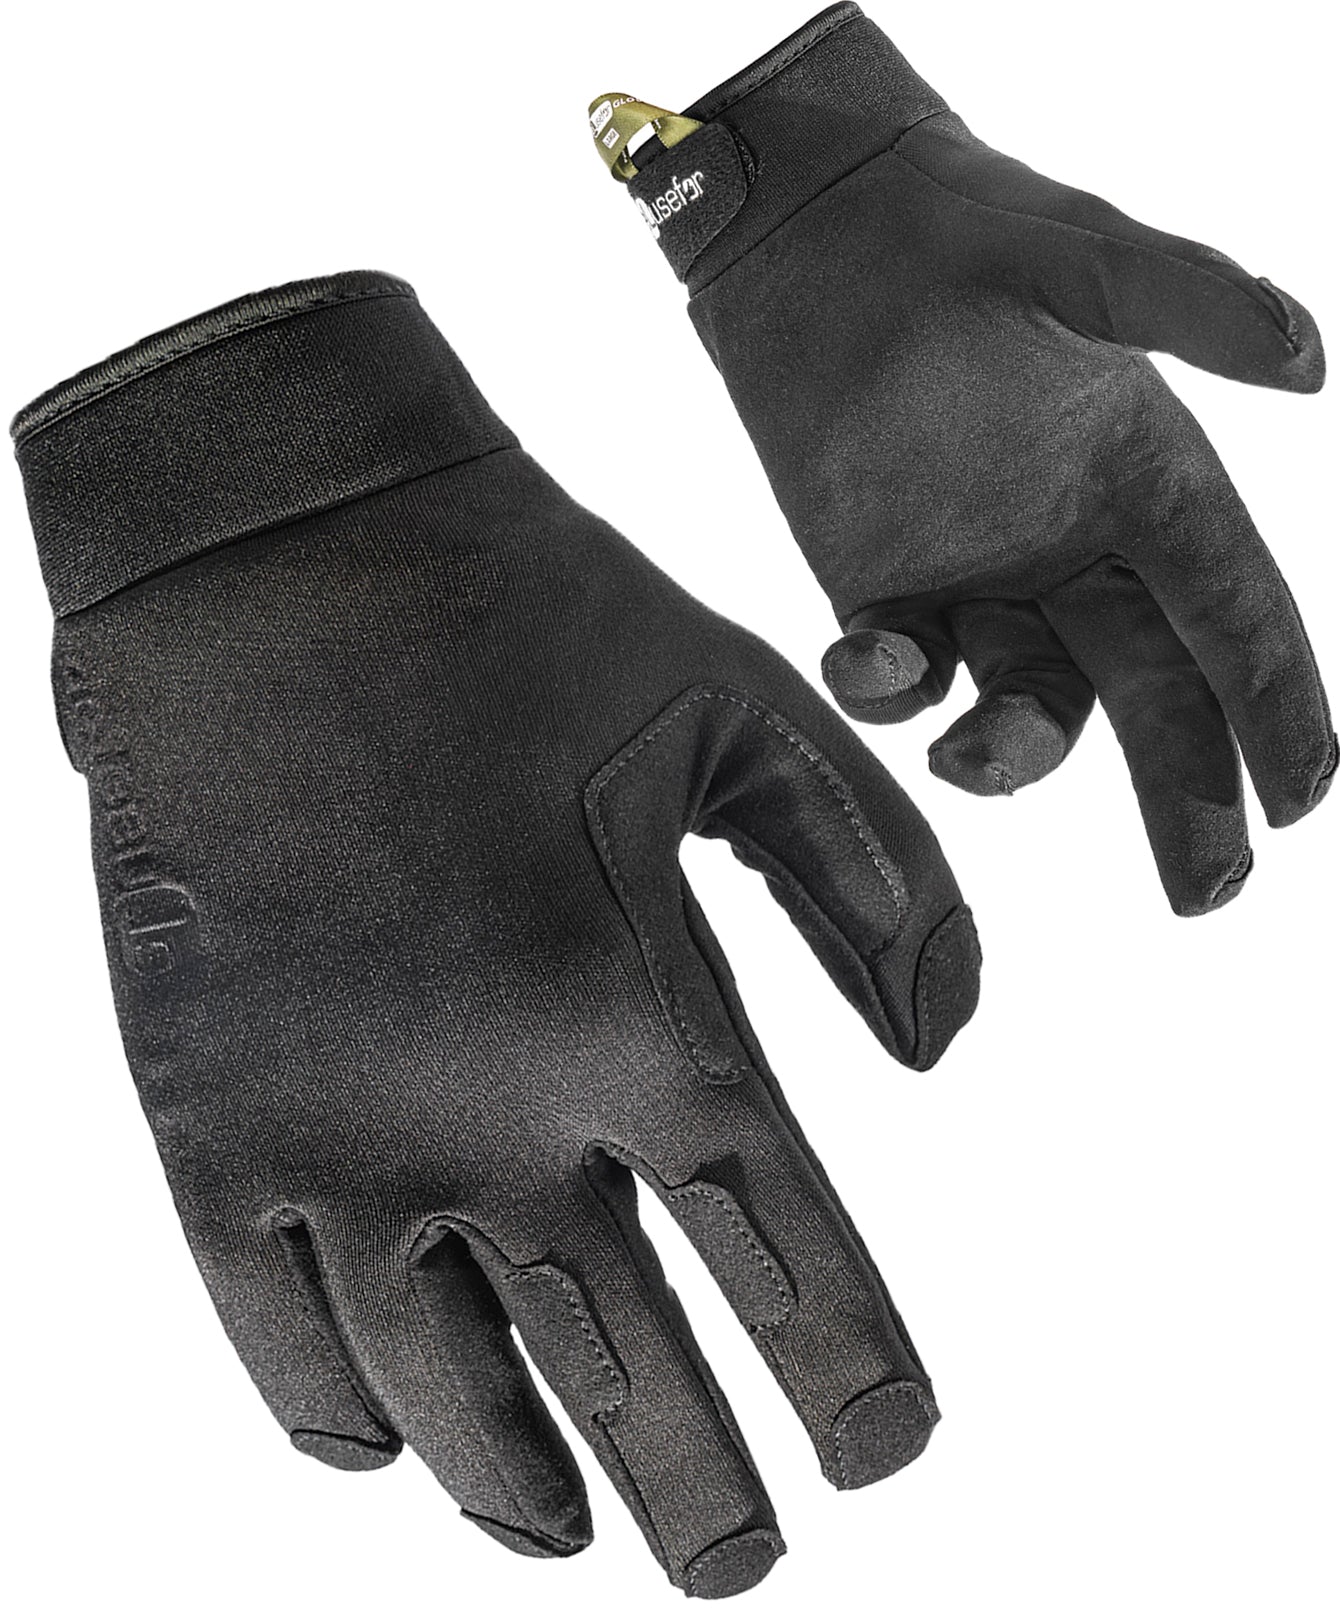 Captain Men's EDC Gloves, .75mm Super Soft Palm, 2Way Touch, Not for Badges, Black